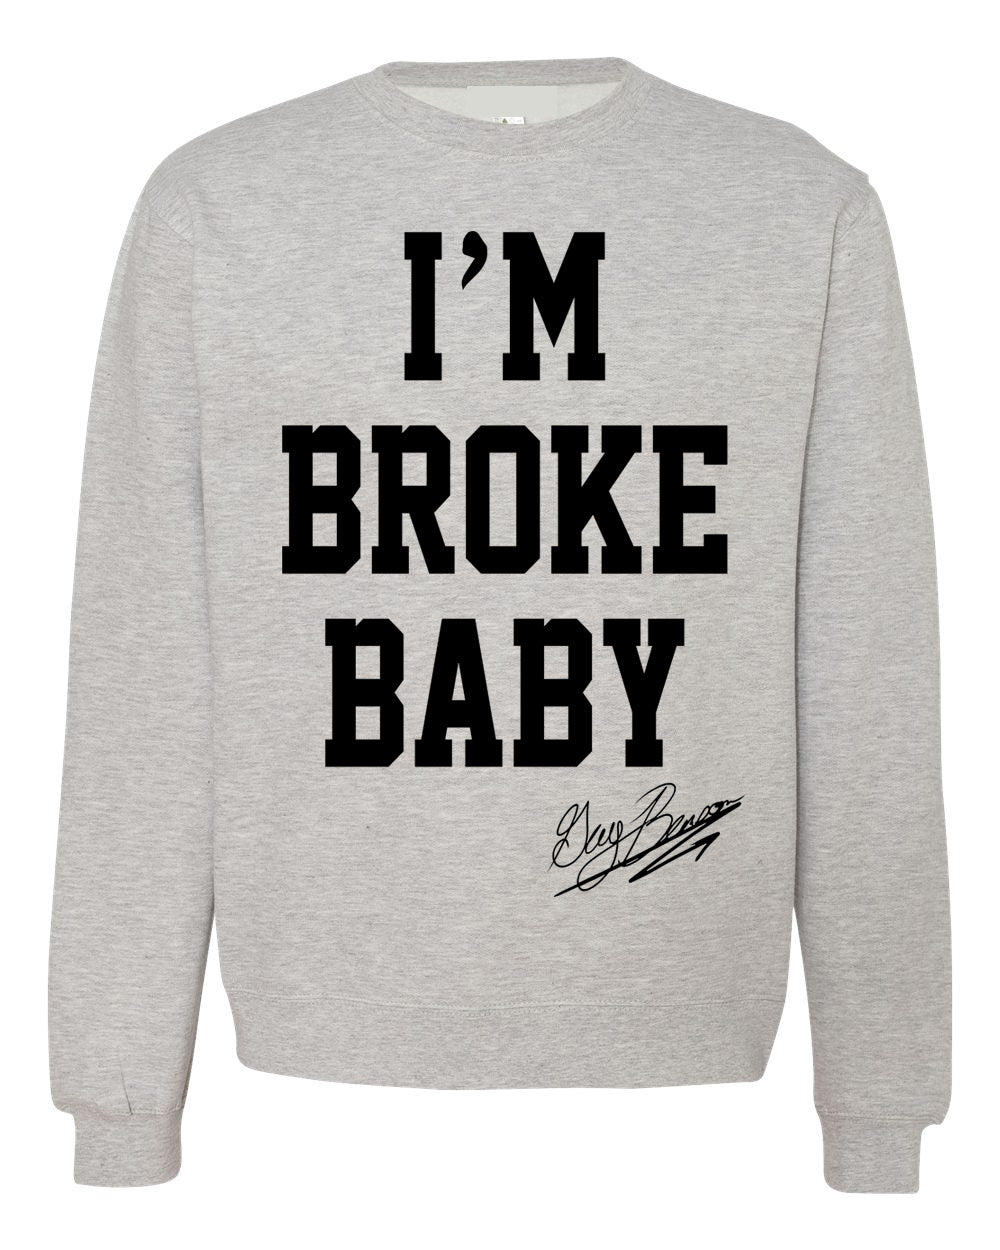 Guy Benson Collection "I'm Broke Baby" crewneck sweater -Grey/Black